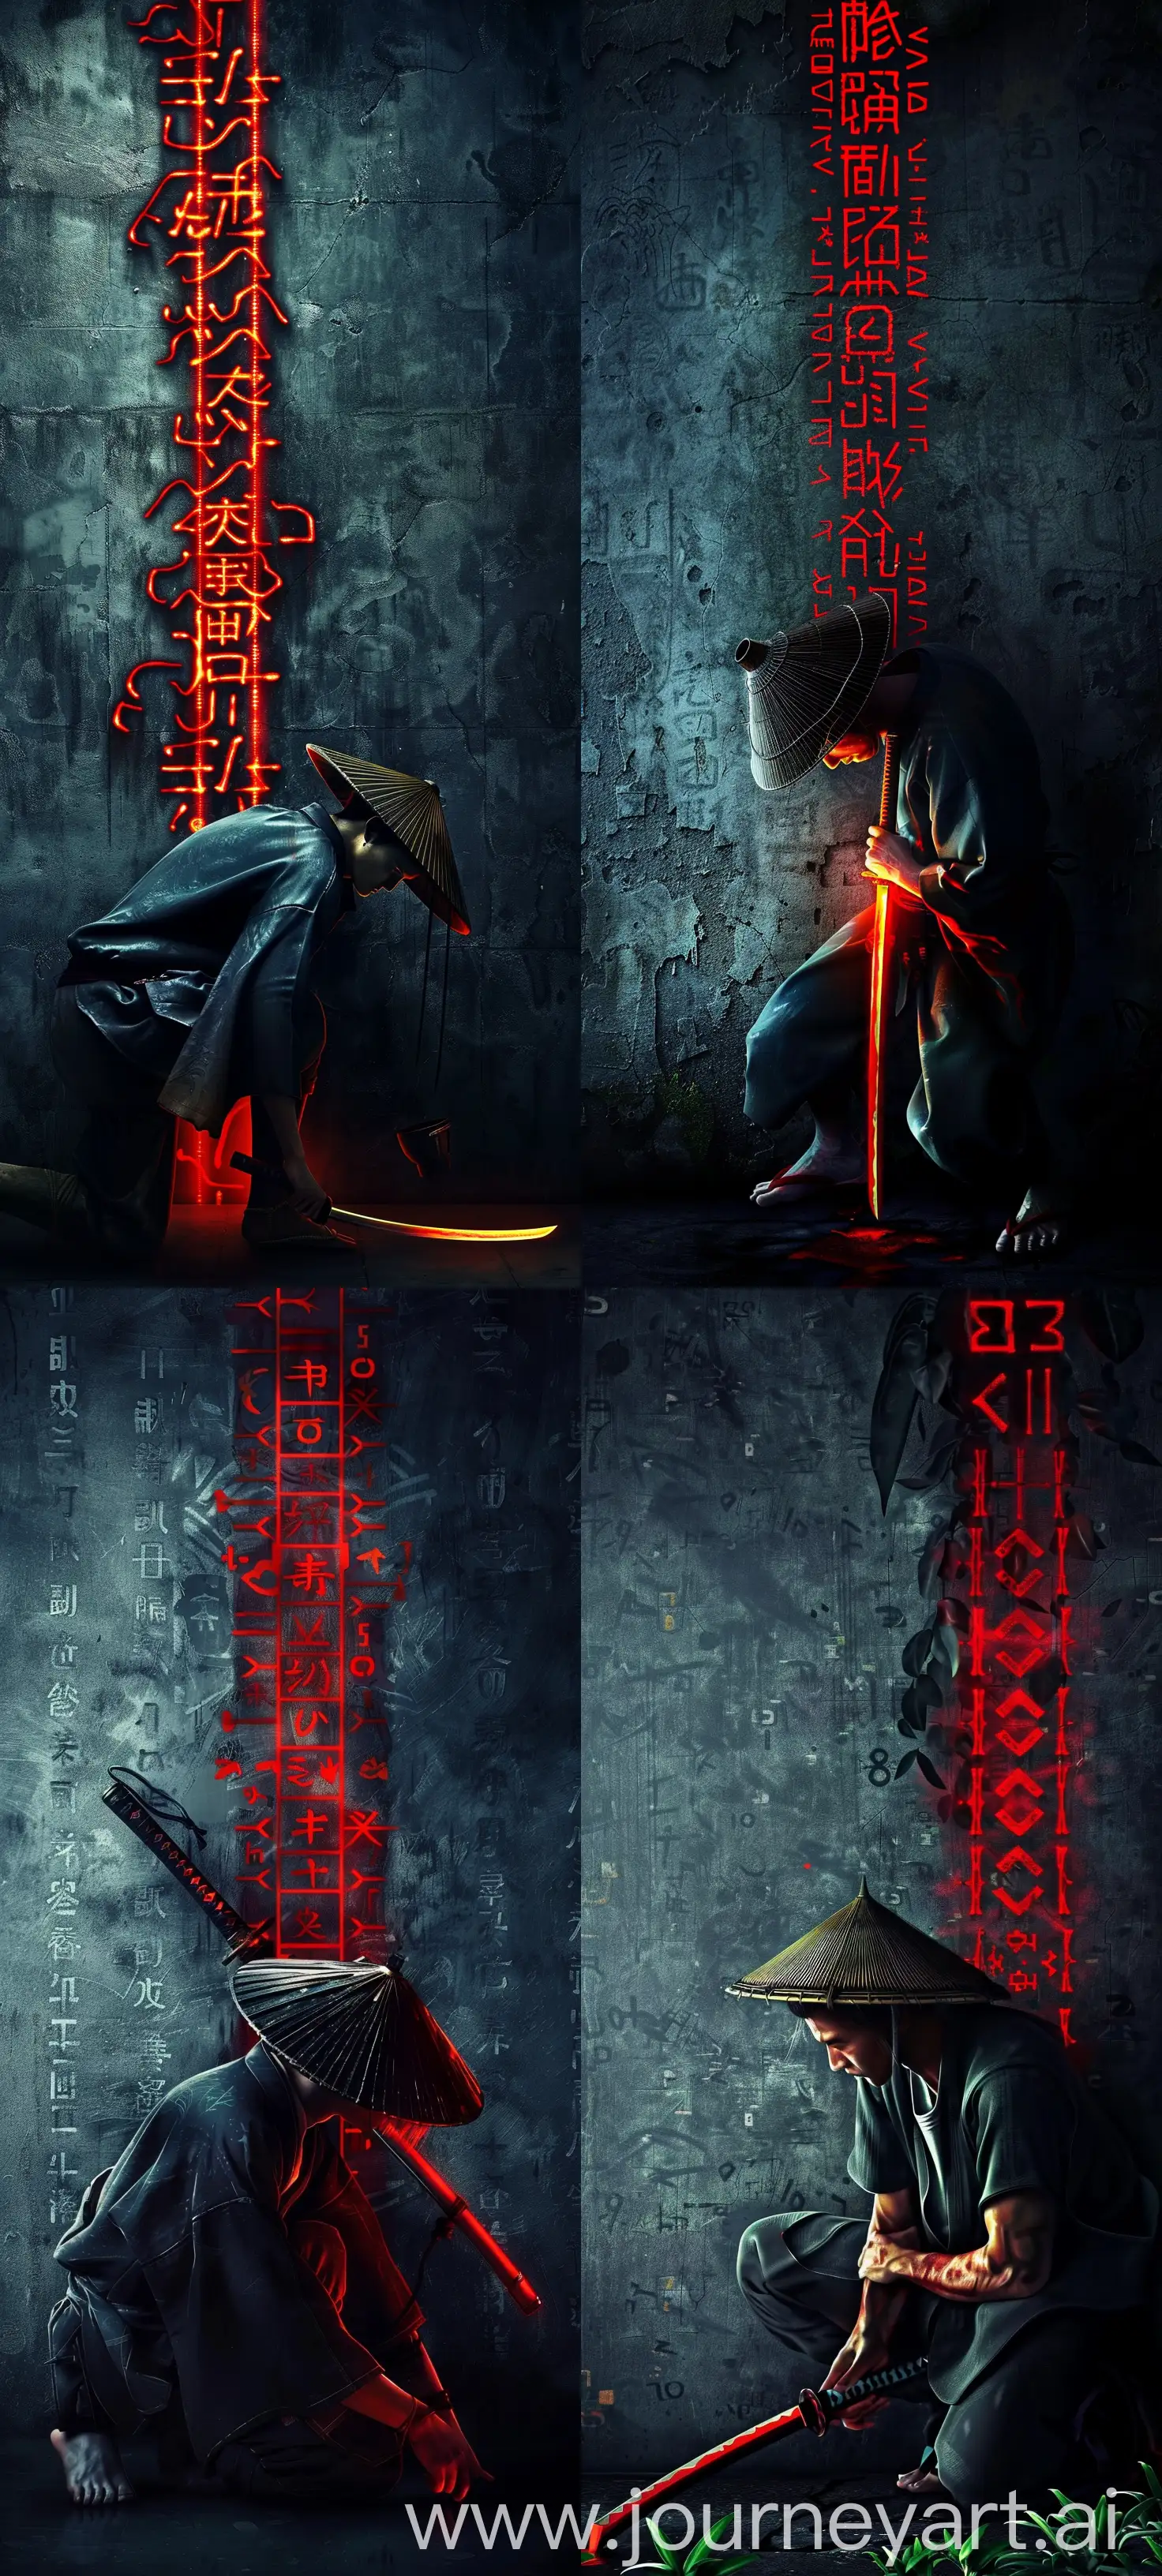 Samurai-in-Bamboo-Hat-Leaning-on-Glowing-Katana-Against-Matrix-Code-Wall